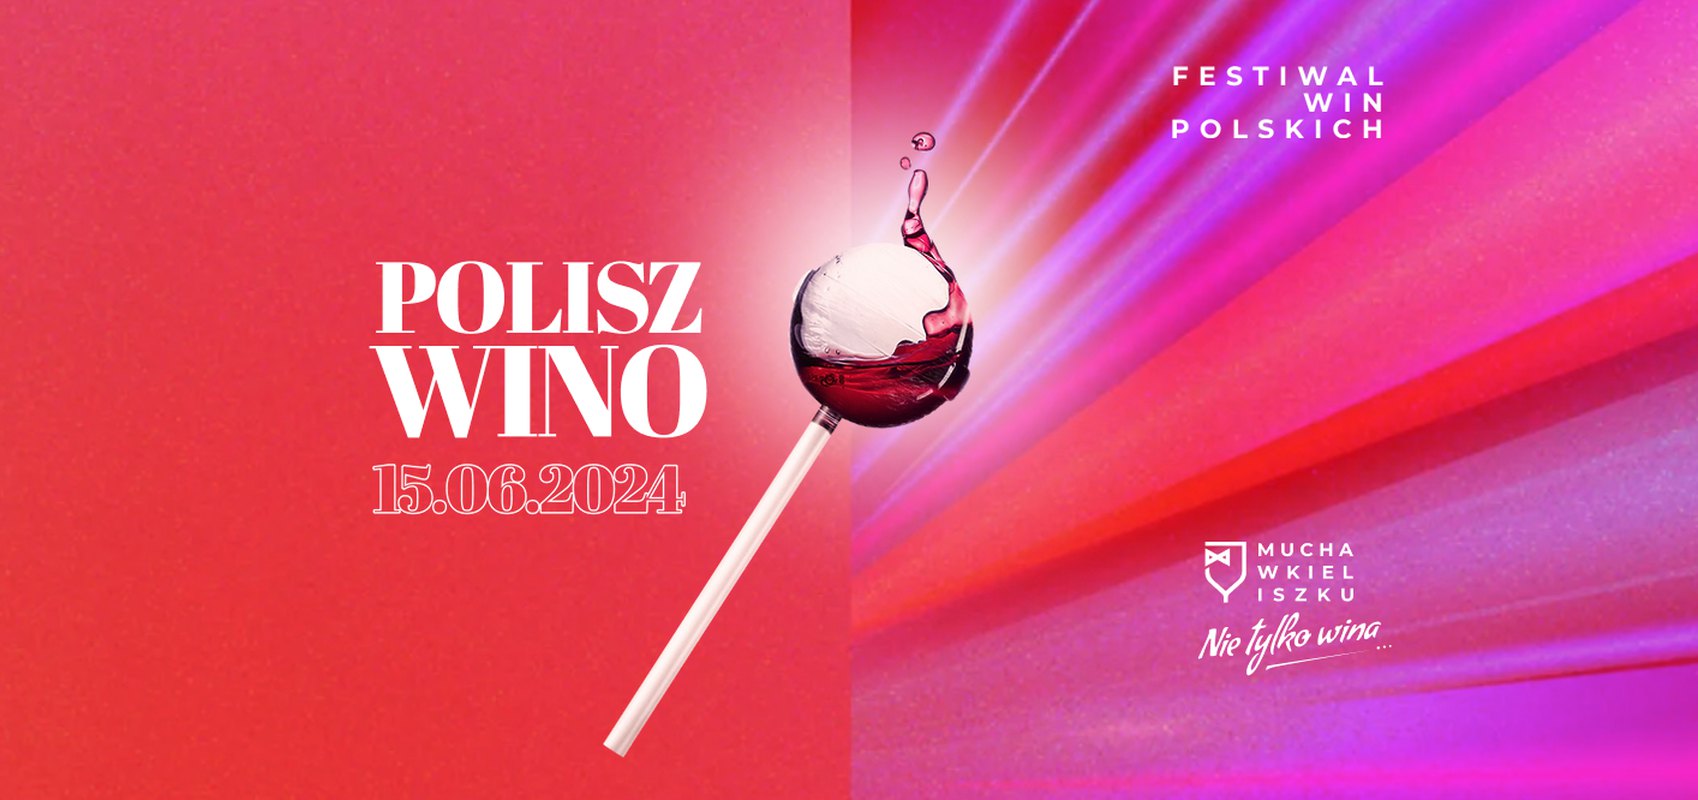 Festiwal Win Polskich POLISZ WINO 2024